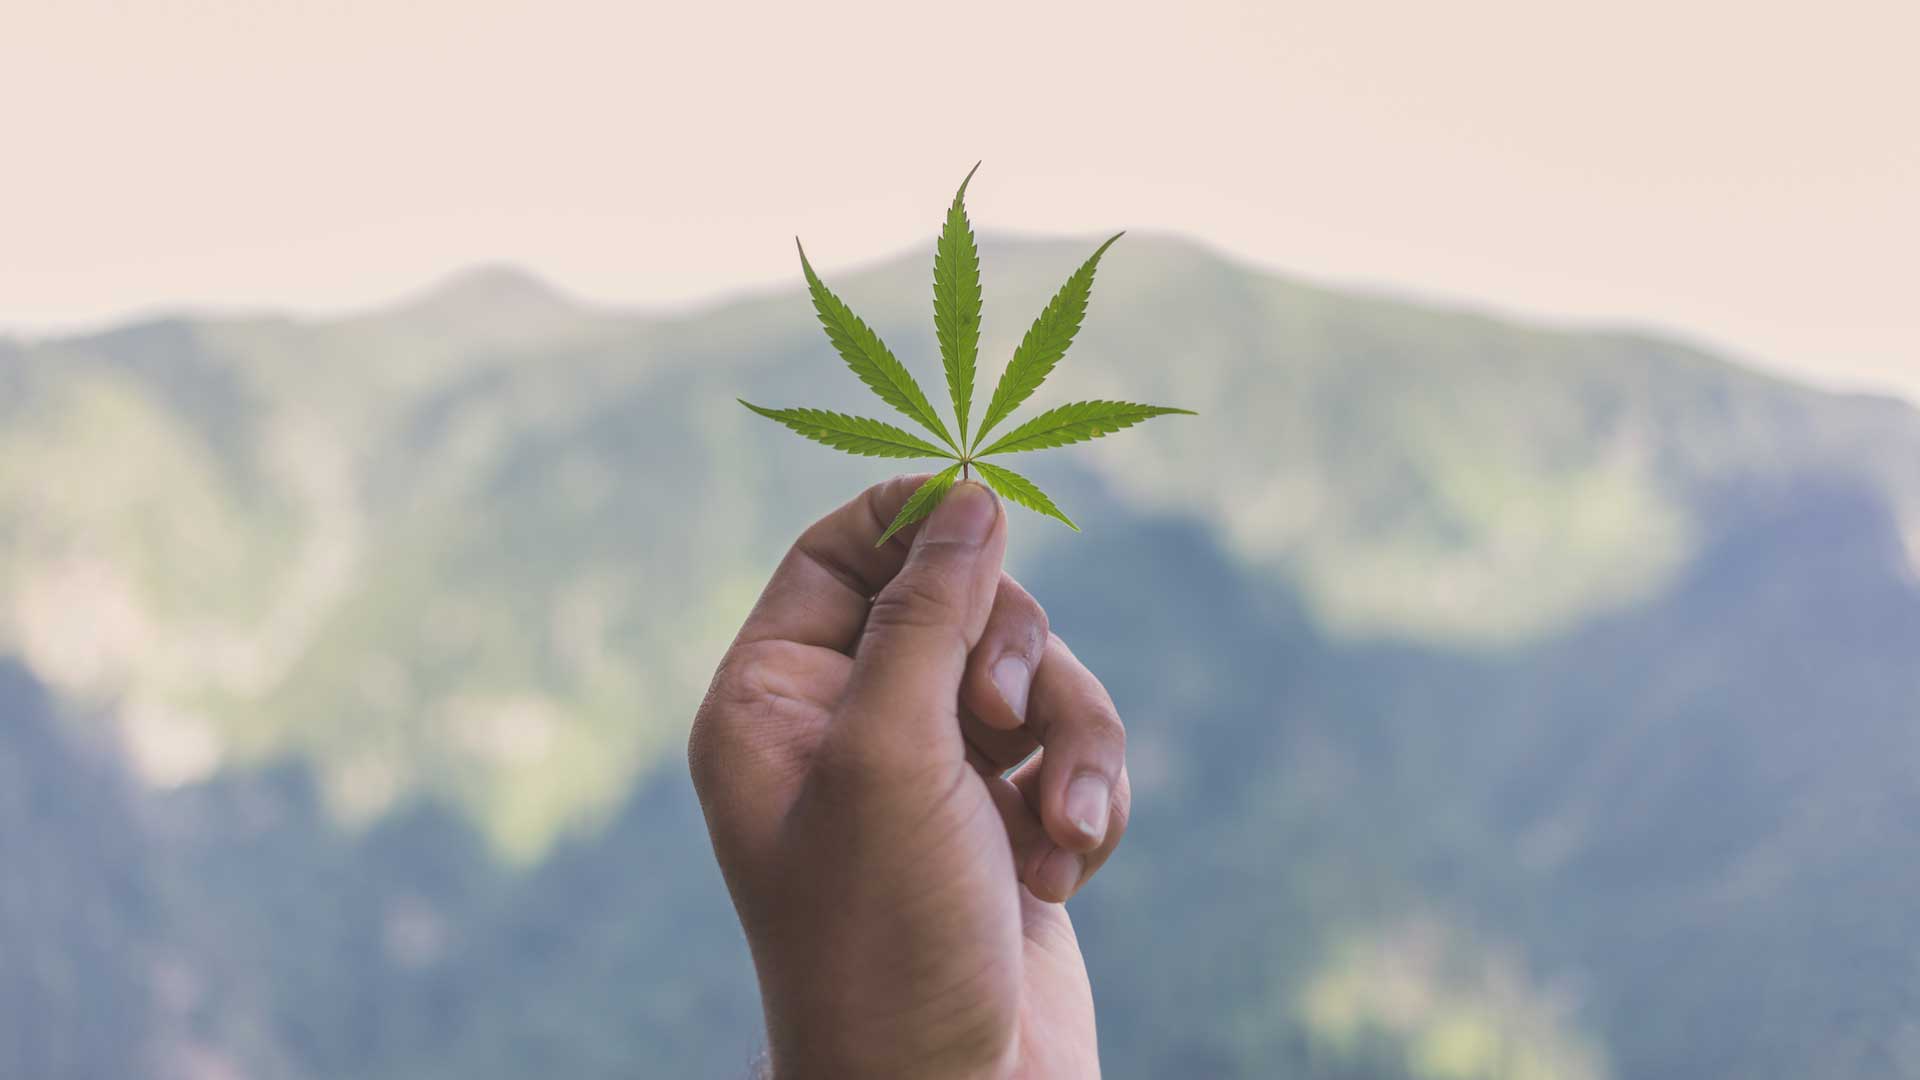 Is medical marijuana safe?